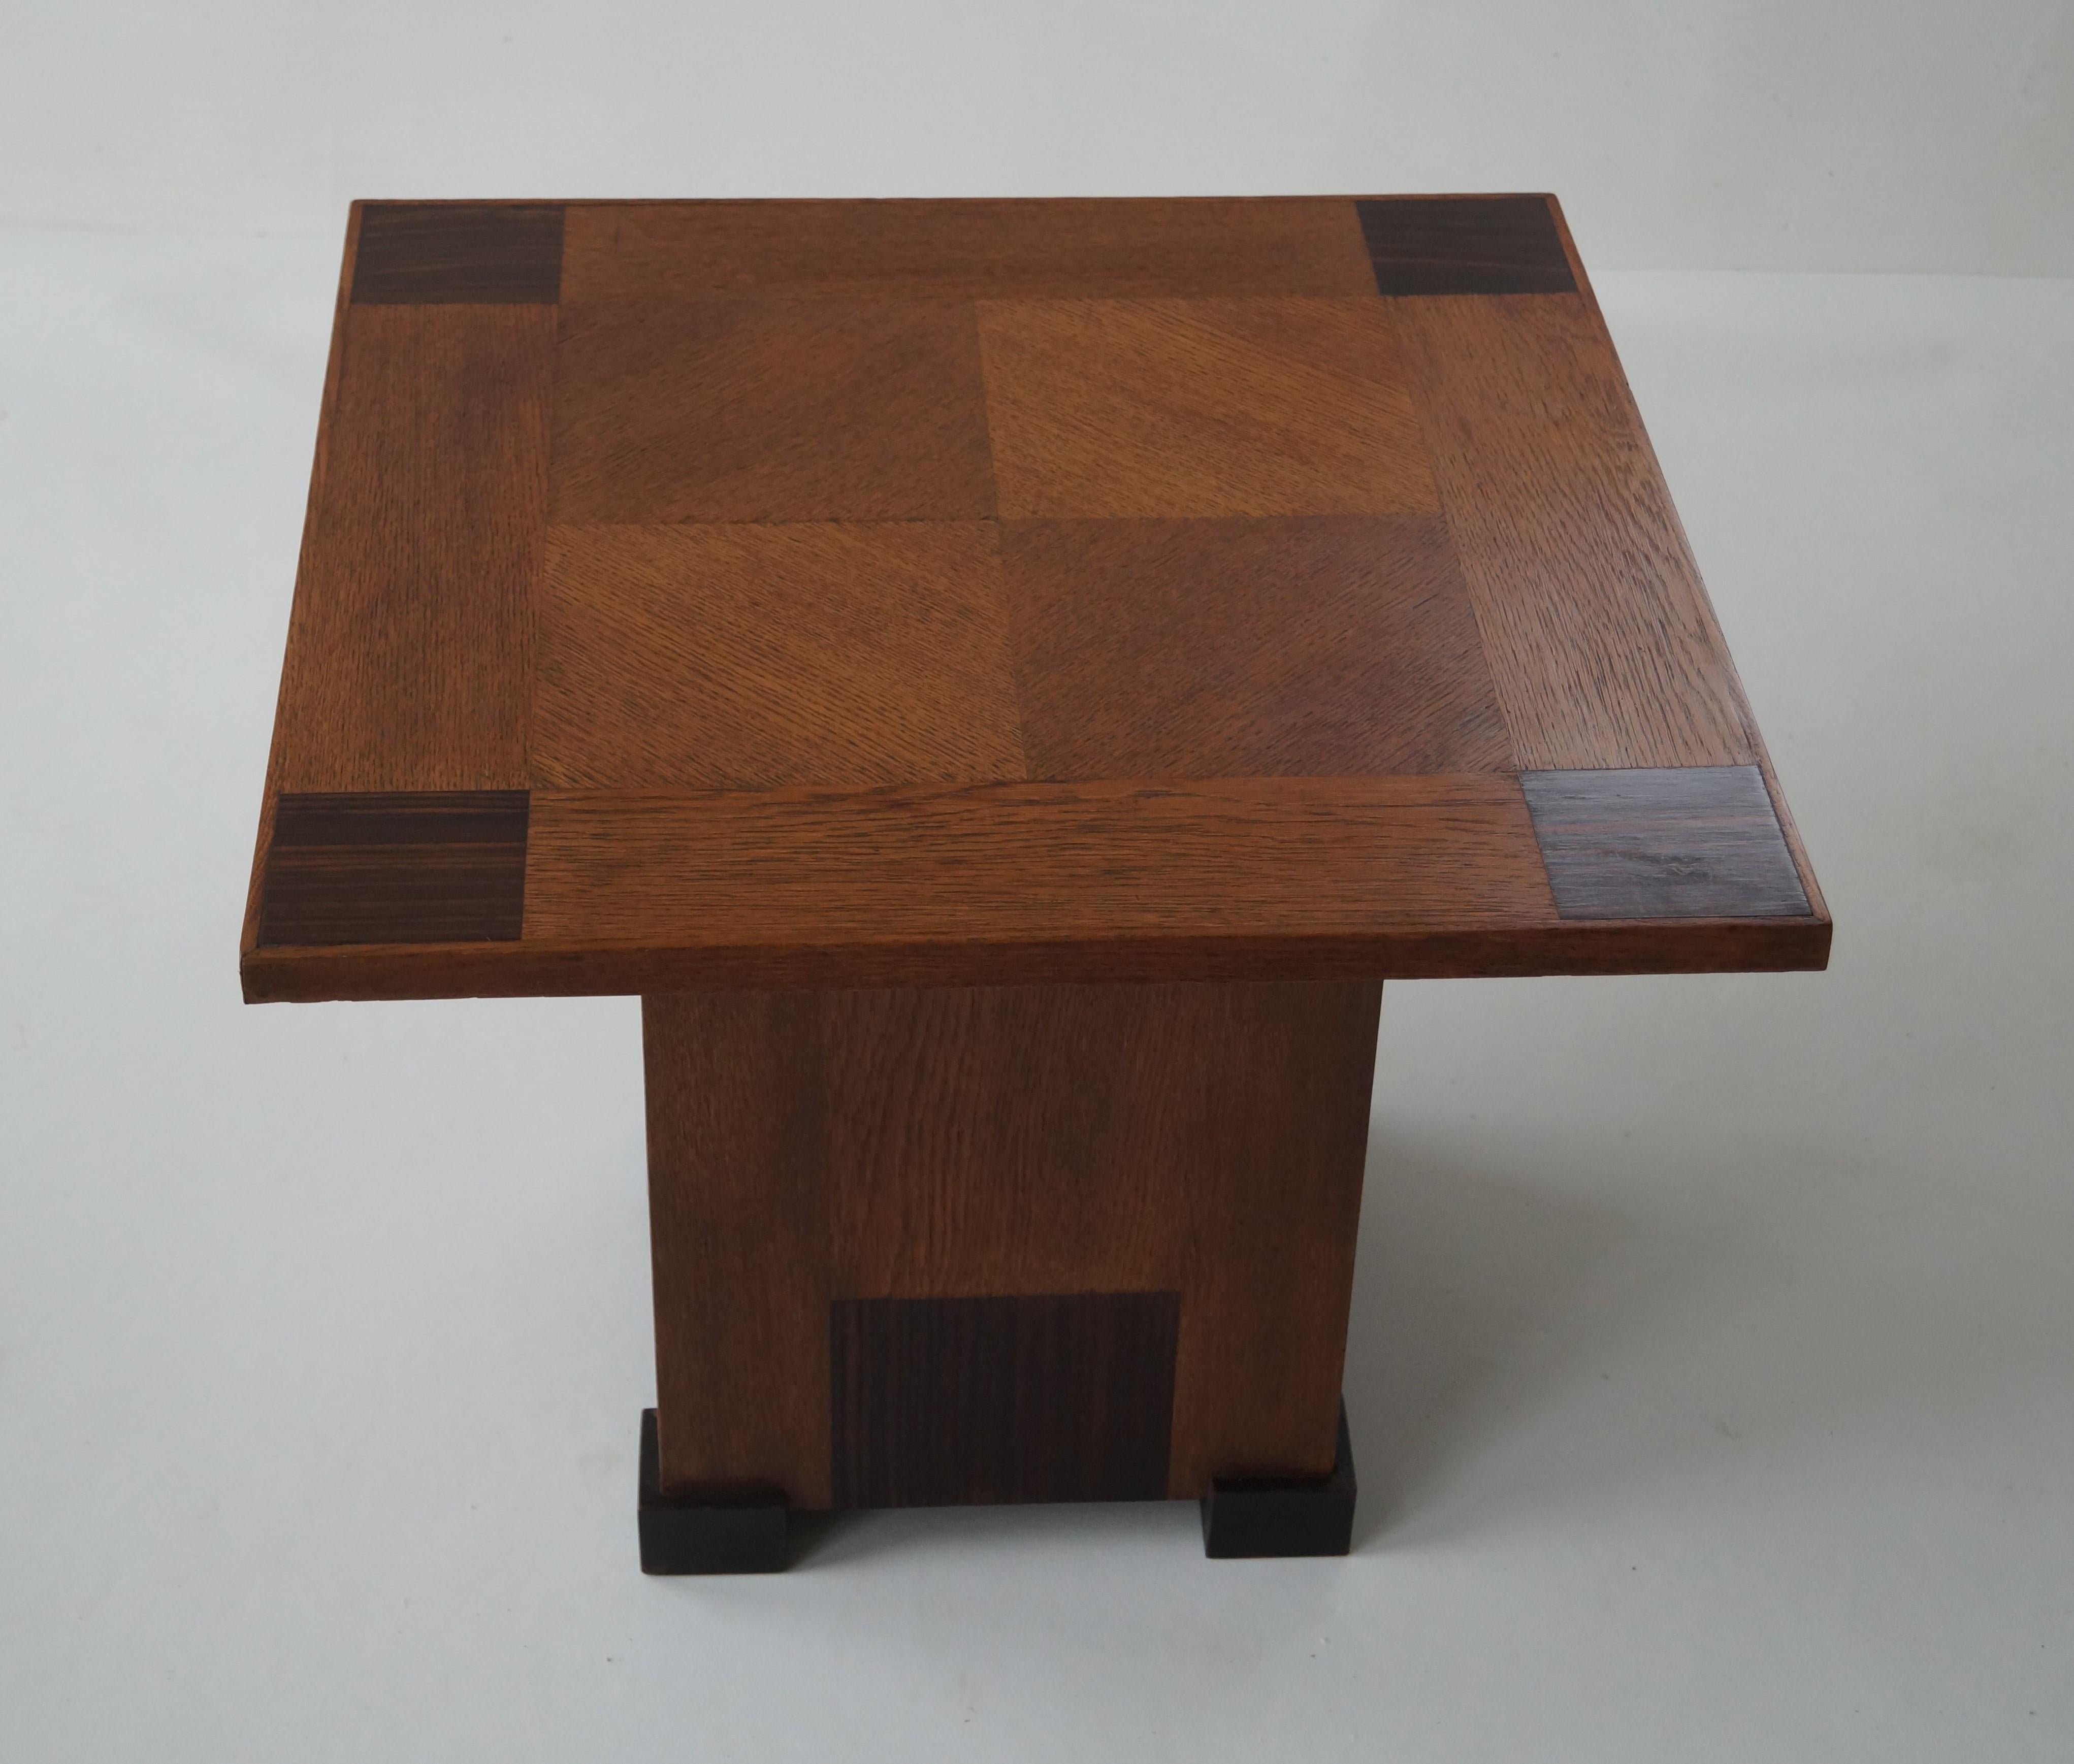 Dutch Art Deco Modernist coffee table in style of P.E.L. Izeren, 1920s For Sale 4